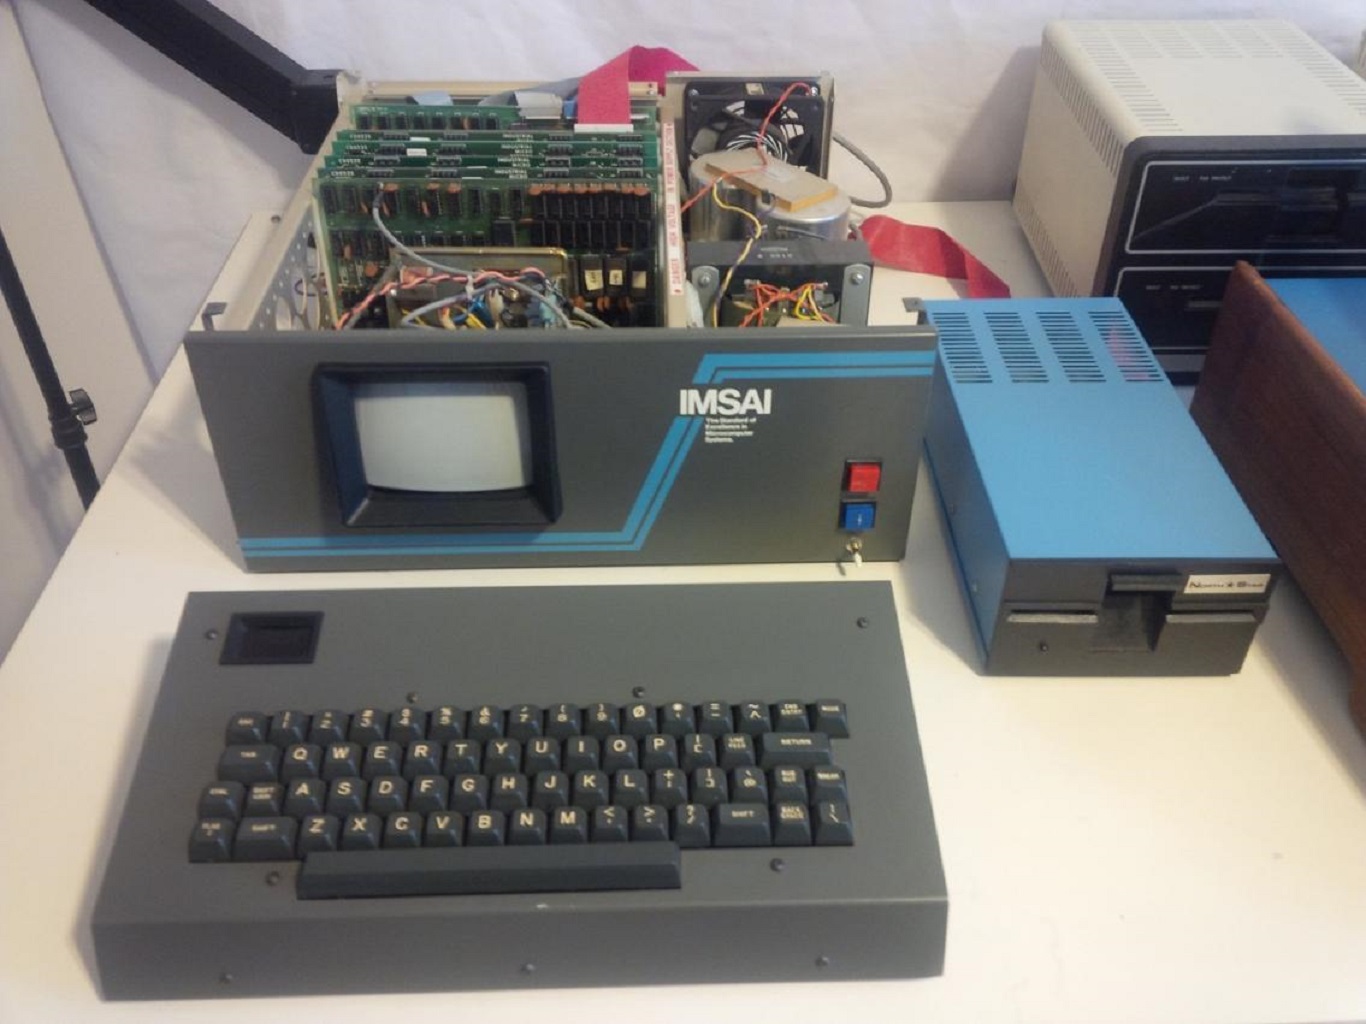 IMSAI PCS-80/30 with IKB-1 keyboard